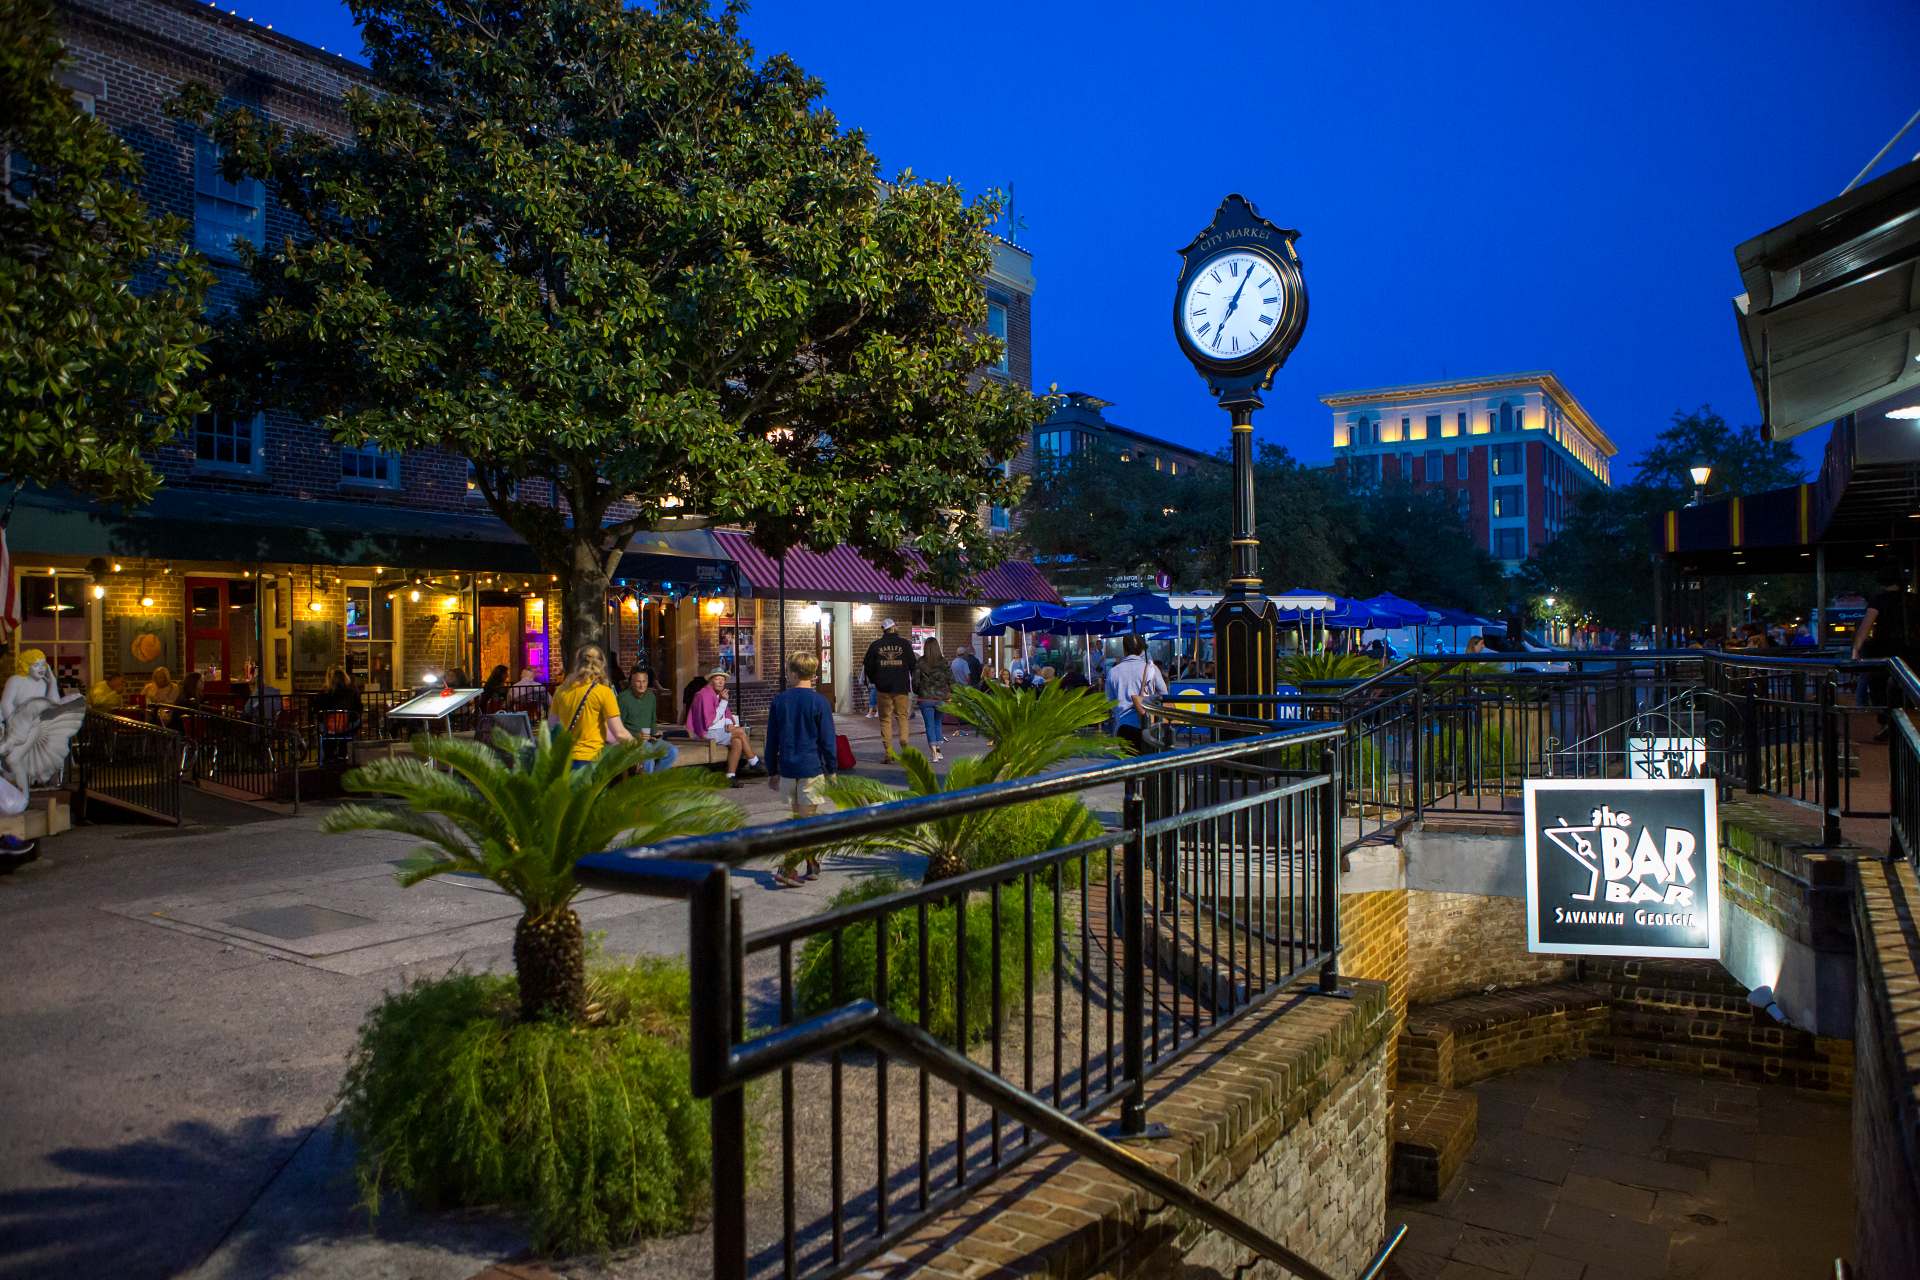 City Market Has Been the Heart of Savannah since the 1700s - Savannah